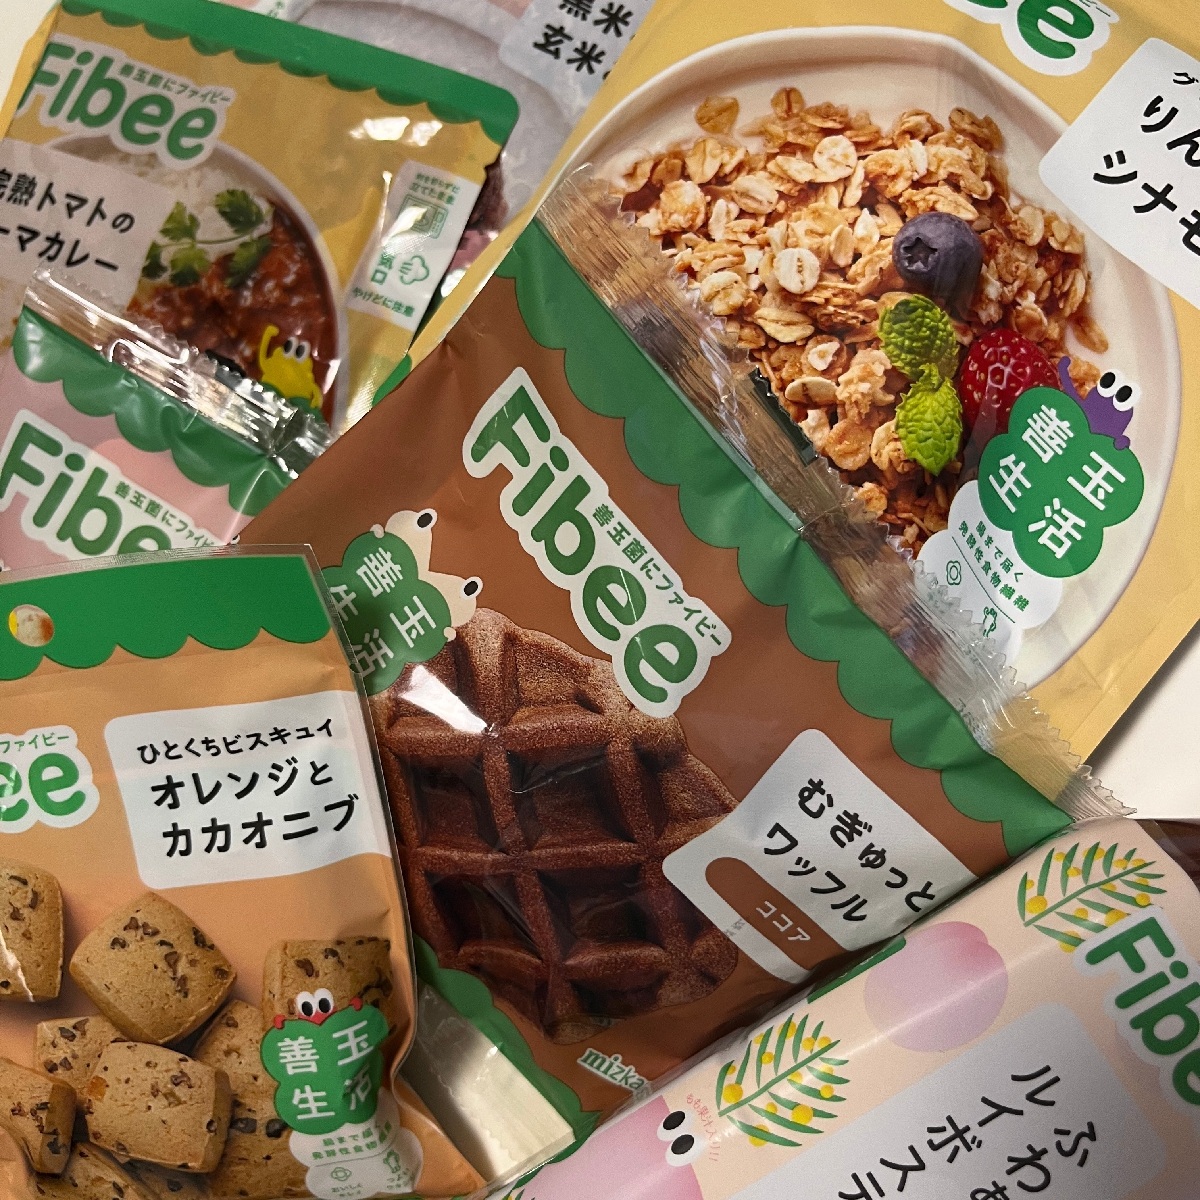 【Fibee】ミツカンより新発売✨美味しく手軽な腸活フードのご紹介😋🍴